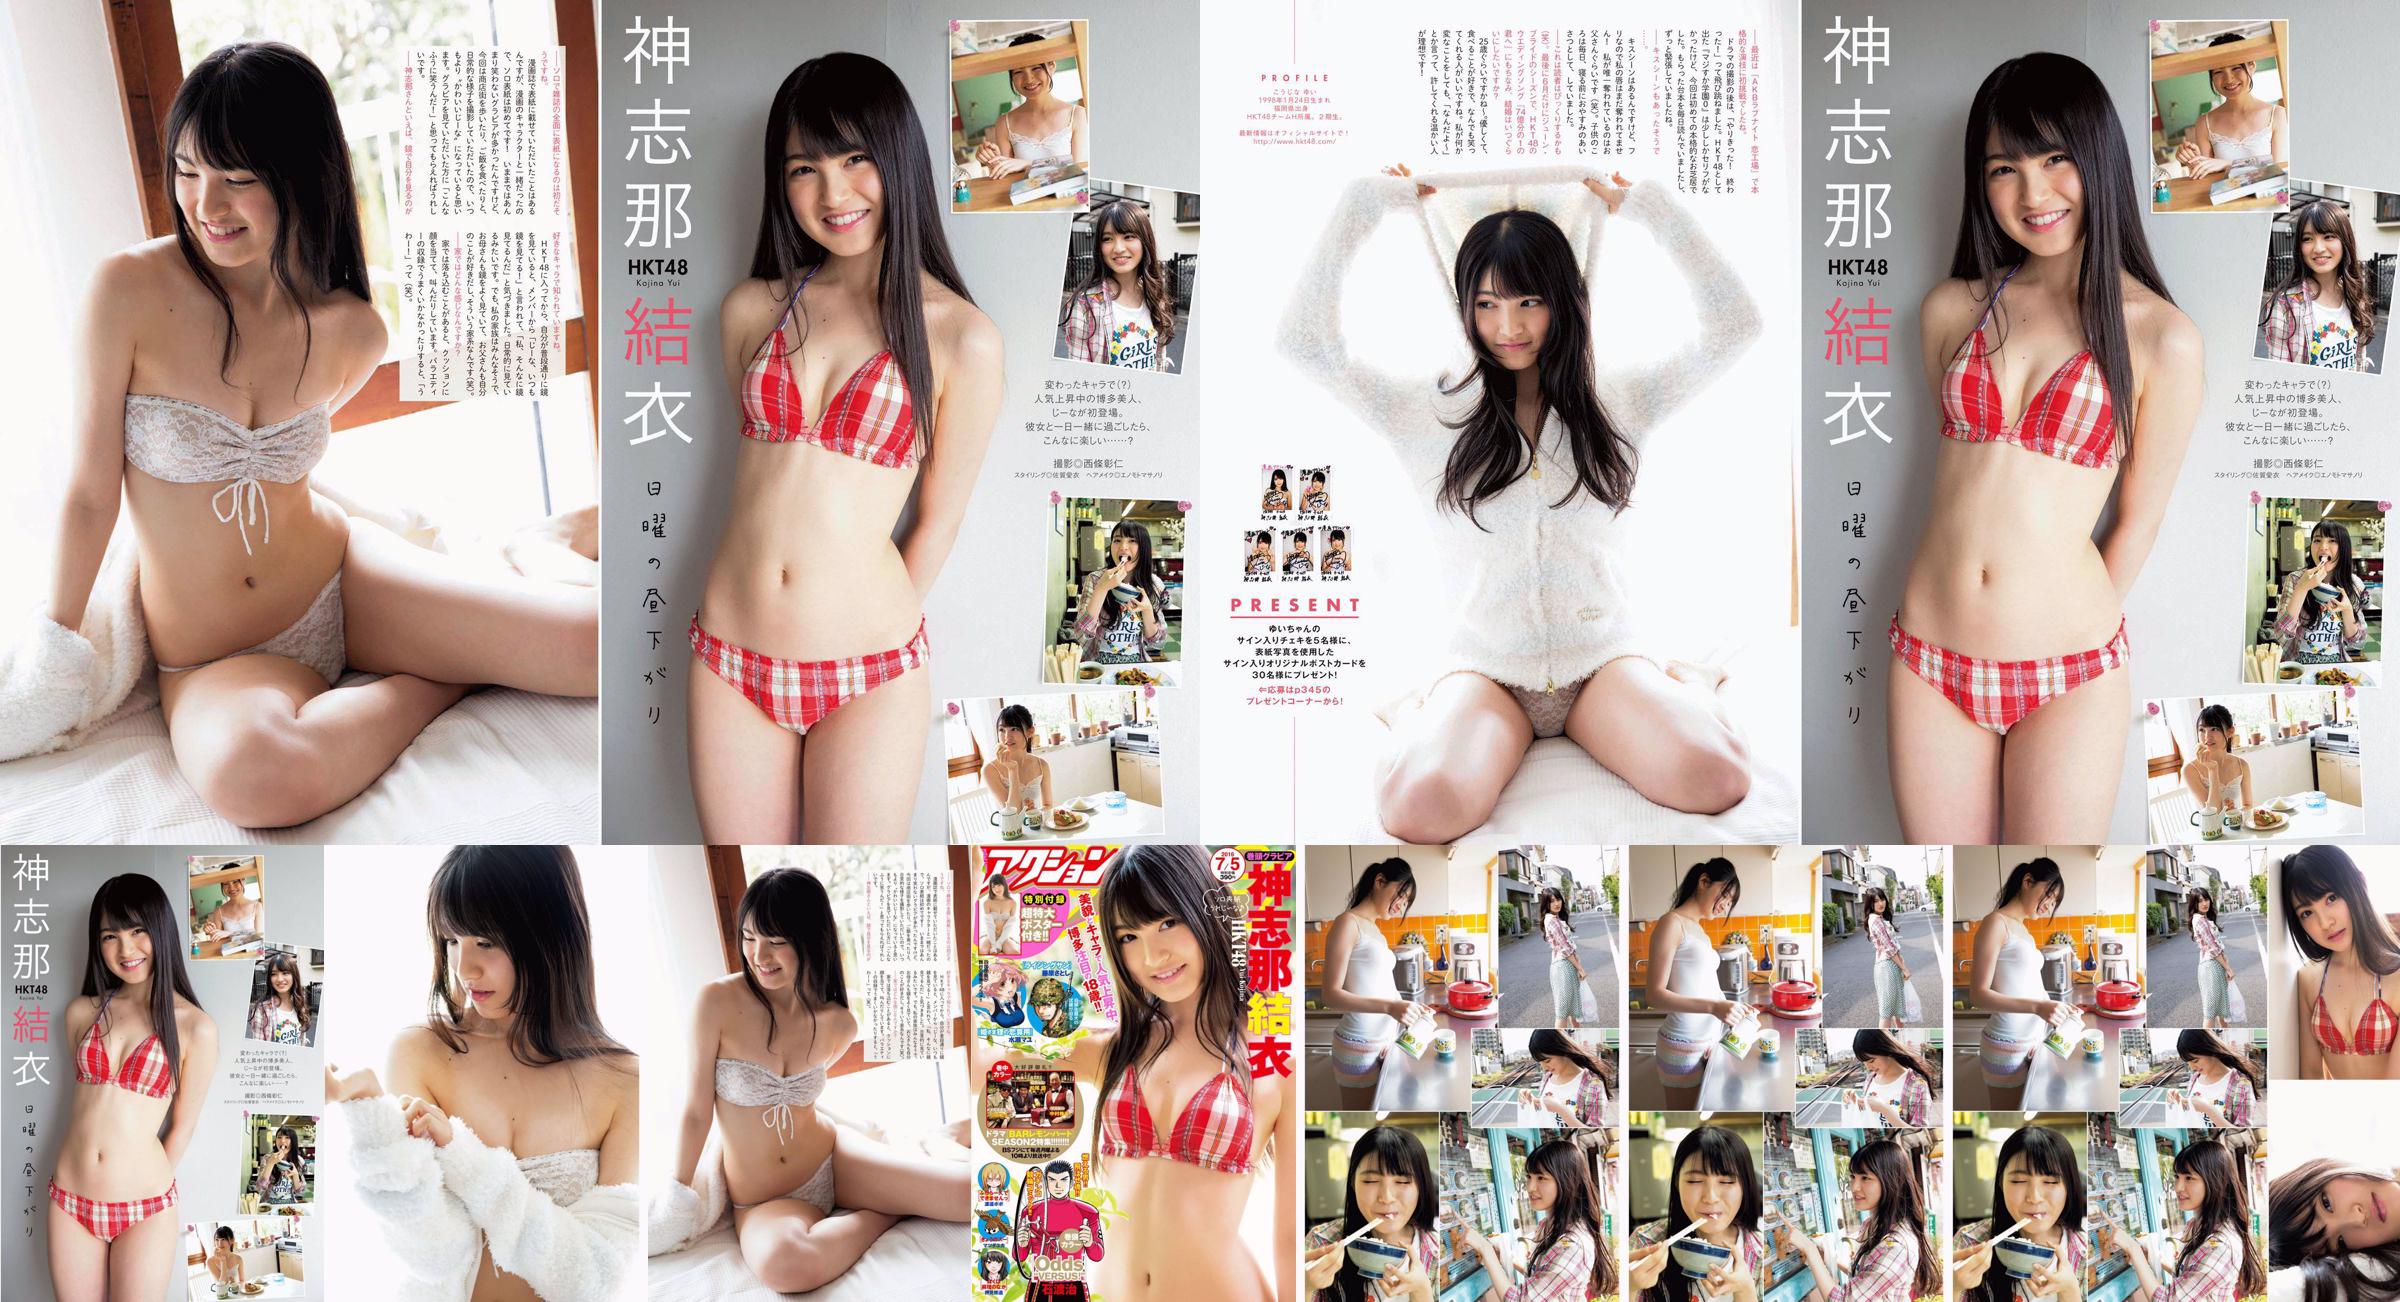 [Manga Action] Shinshina Yui 2016 N ° 13 Photo Magazine No.0fcaaf Page 1